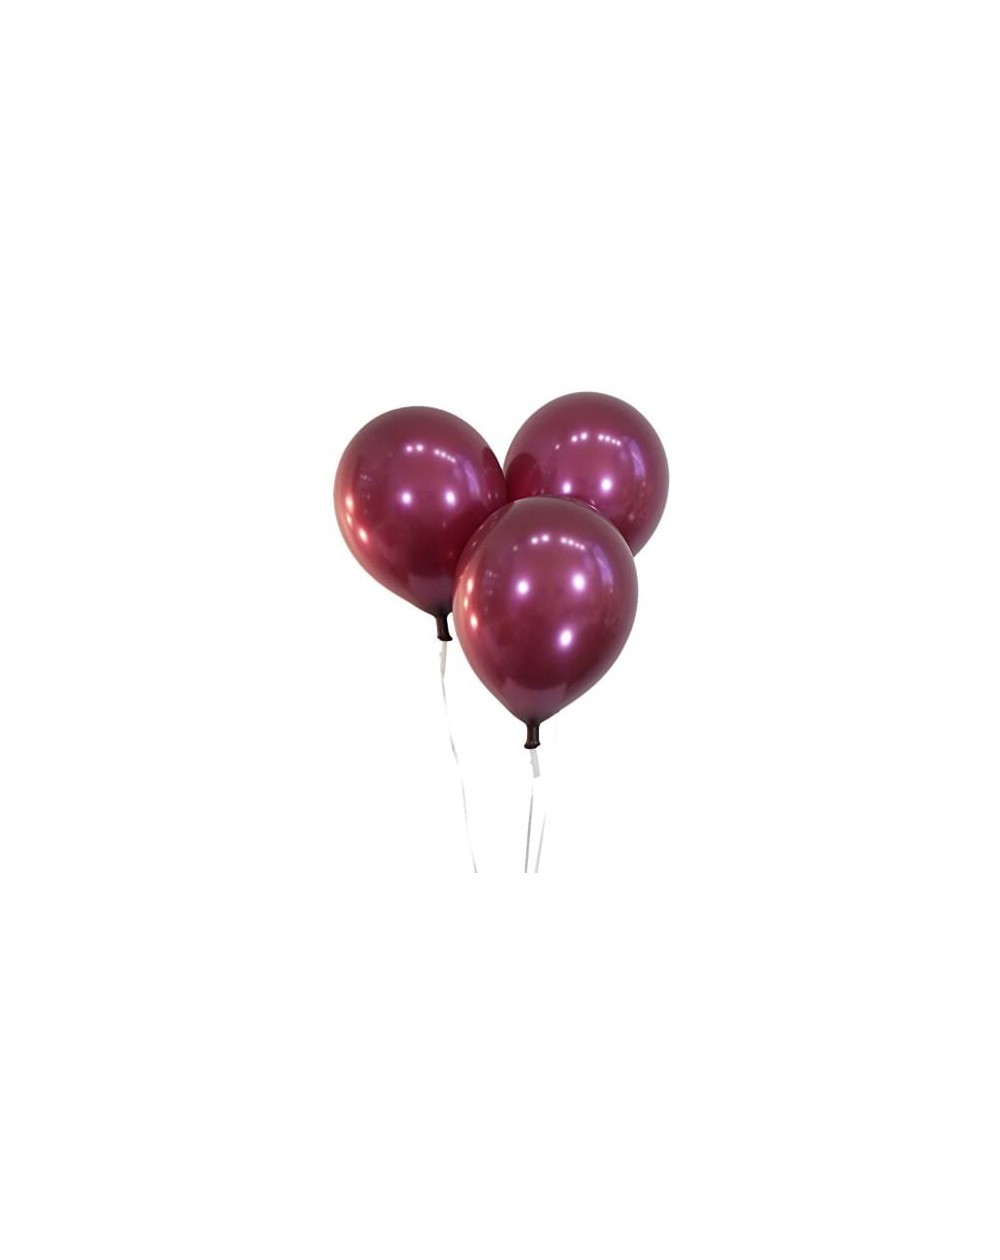 Balloons Creative Balloons 12" Latex Balloons - Pack of 100 Pieces - Metallic Burgundy - Metallic Burgundy - CO12MCWRU7V $22.05